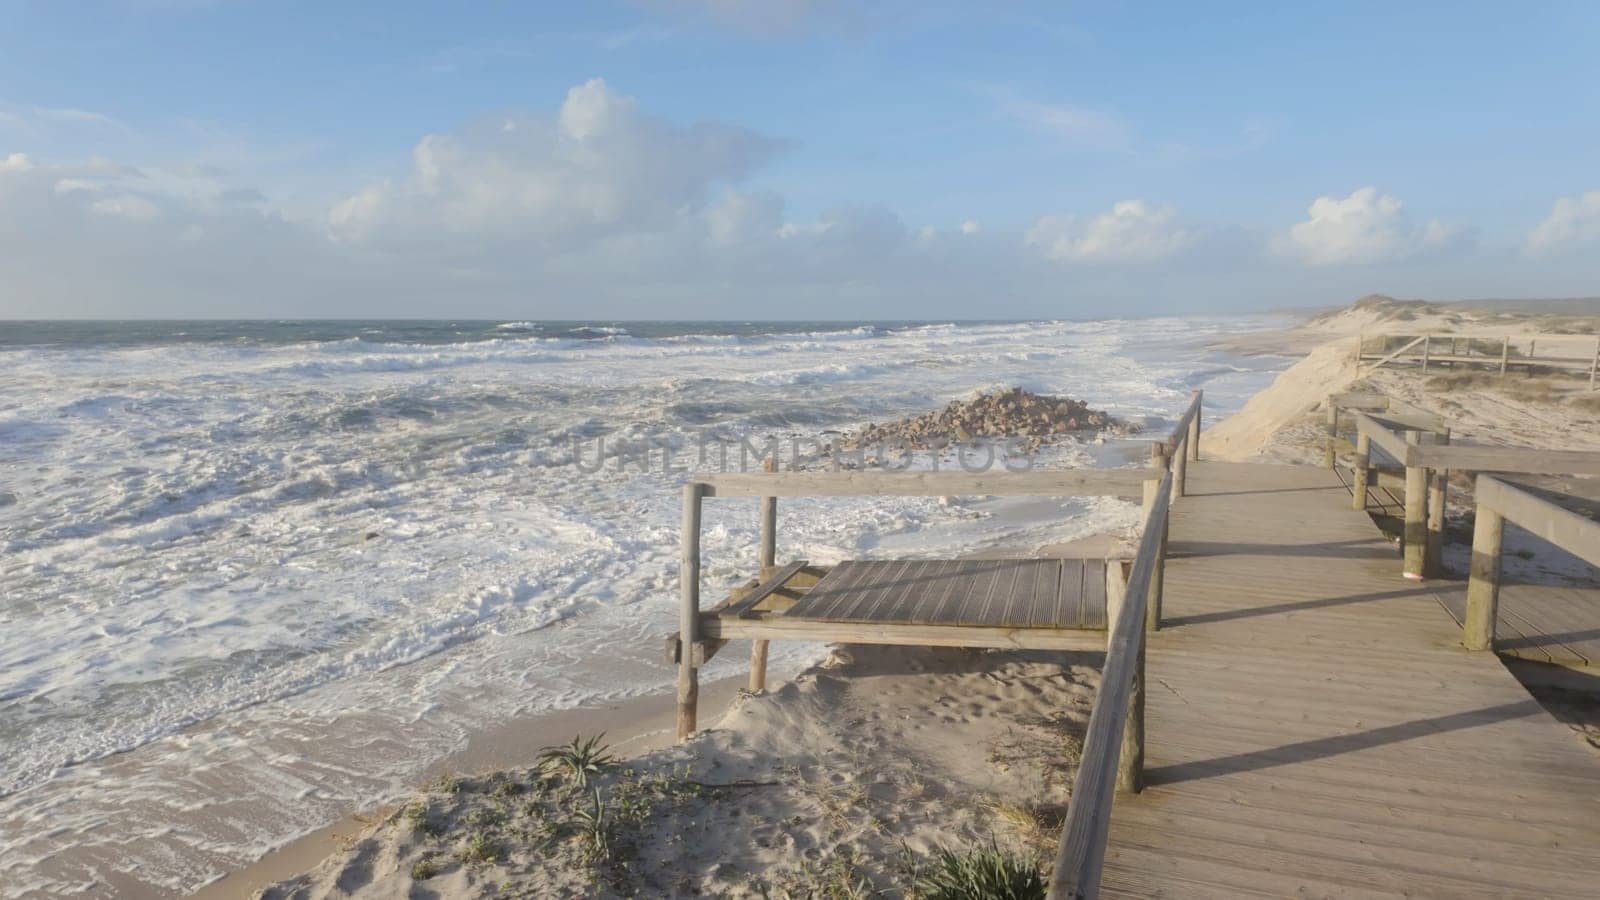 Storm Irene worsens the fragile dune protection by homydesign